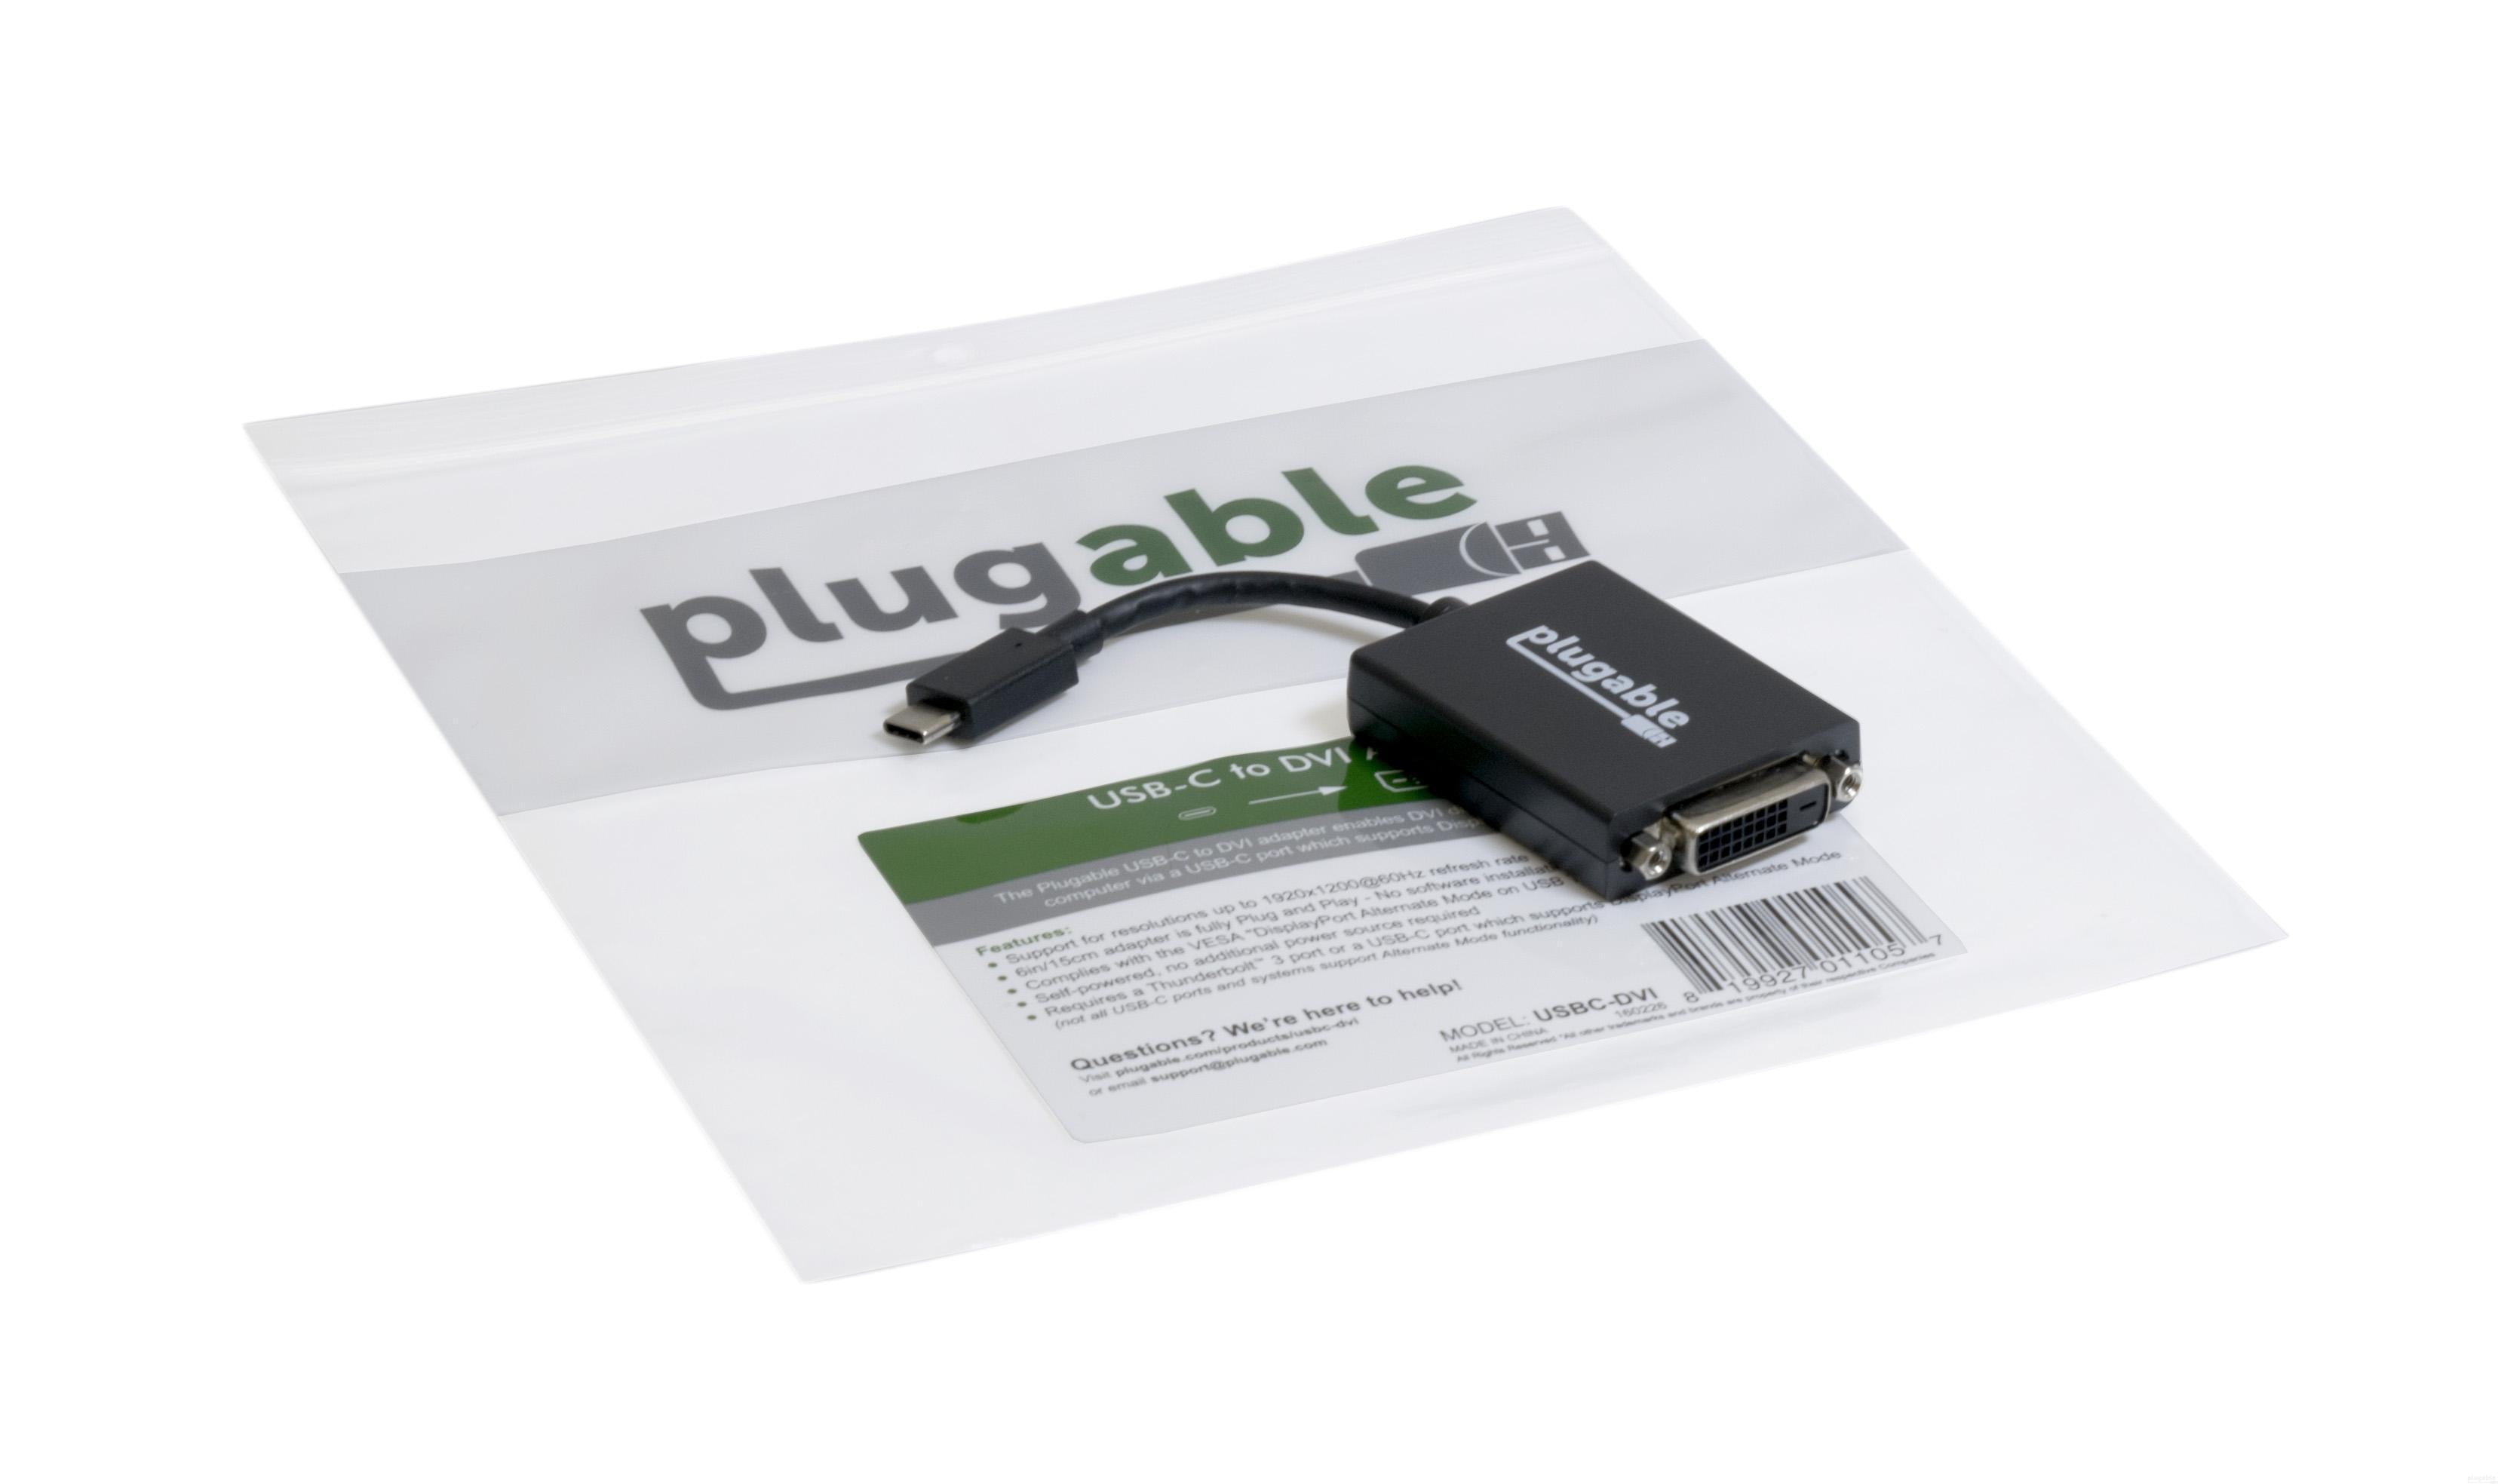 Plugable USB 3.1 Type-C to DVI Adapter – Plugable Technologies